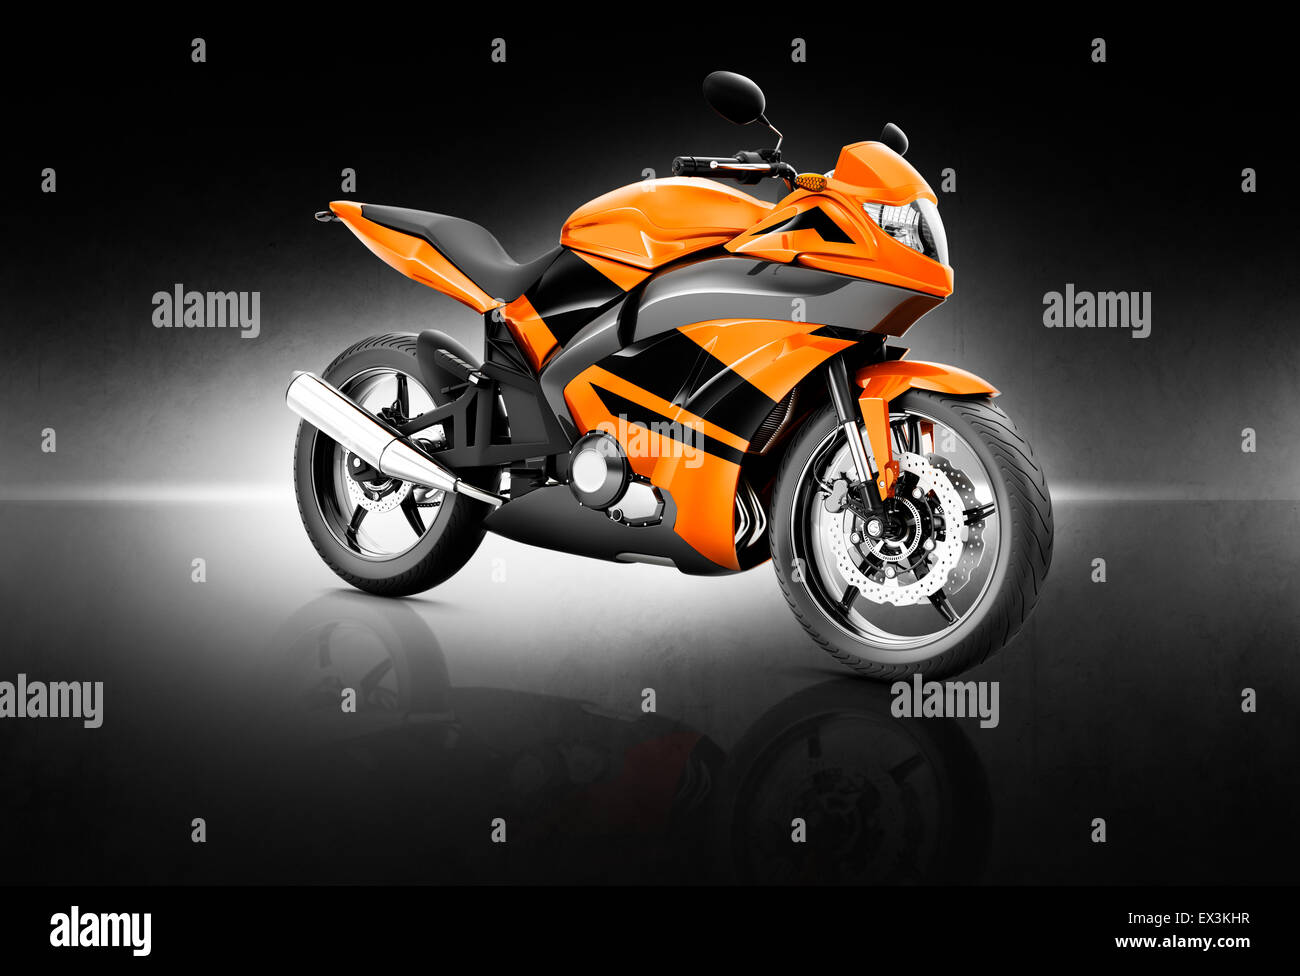 Motorcycle Motorbike Bike Riding Rider Contemporary Orange Concept Stock Photo